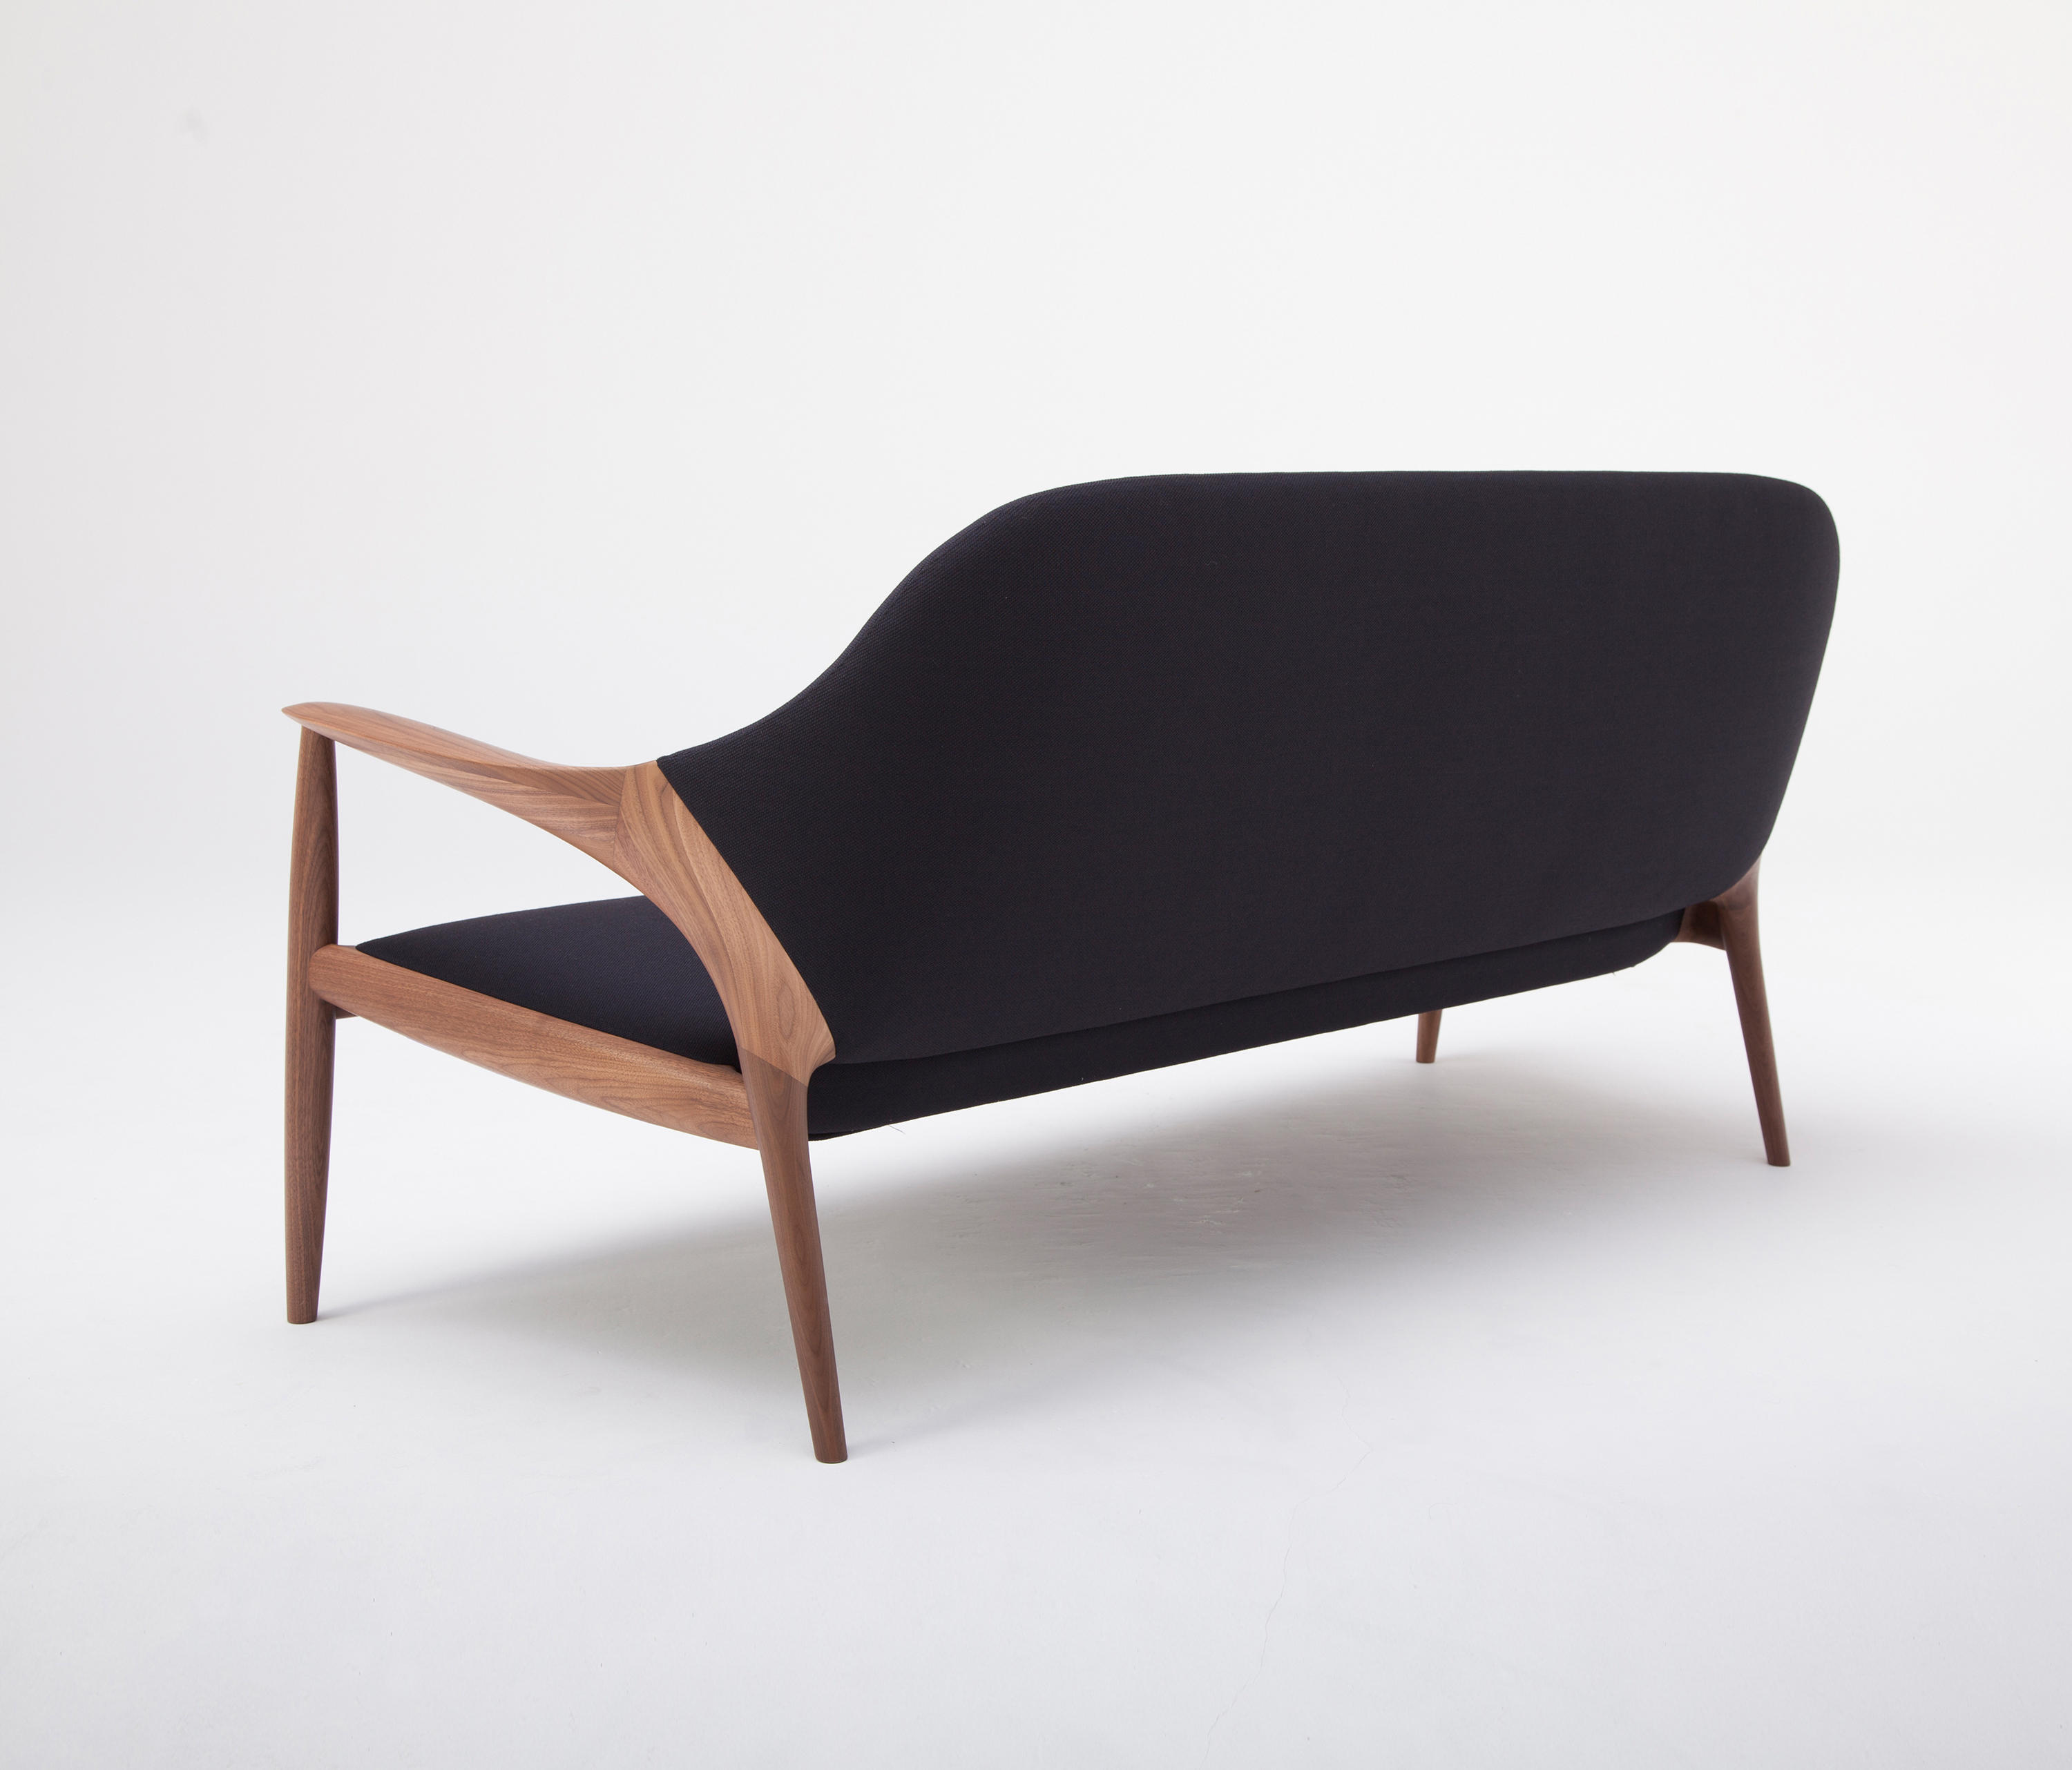 Kunst Collection by INODA+SVEJE for Karimoku Furniture